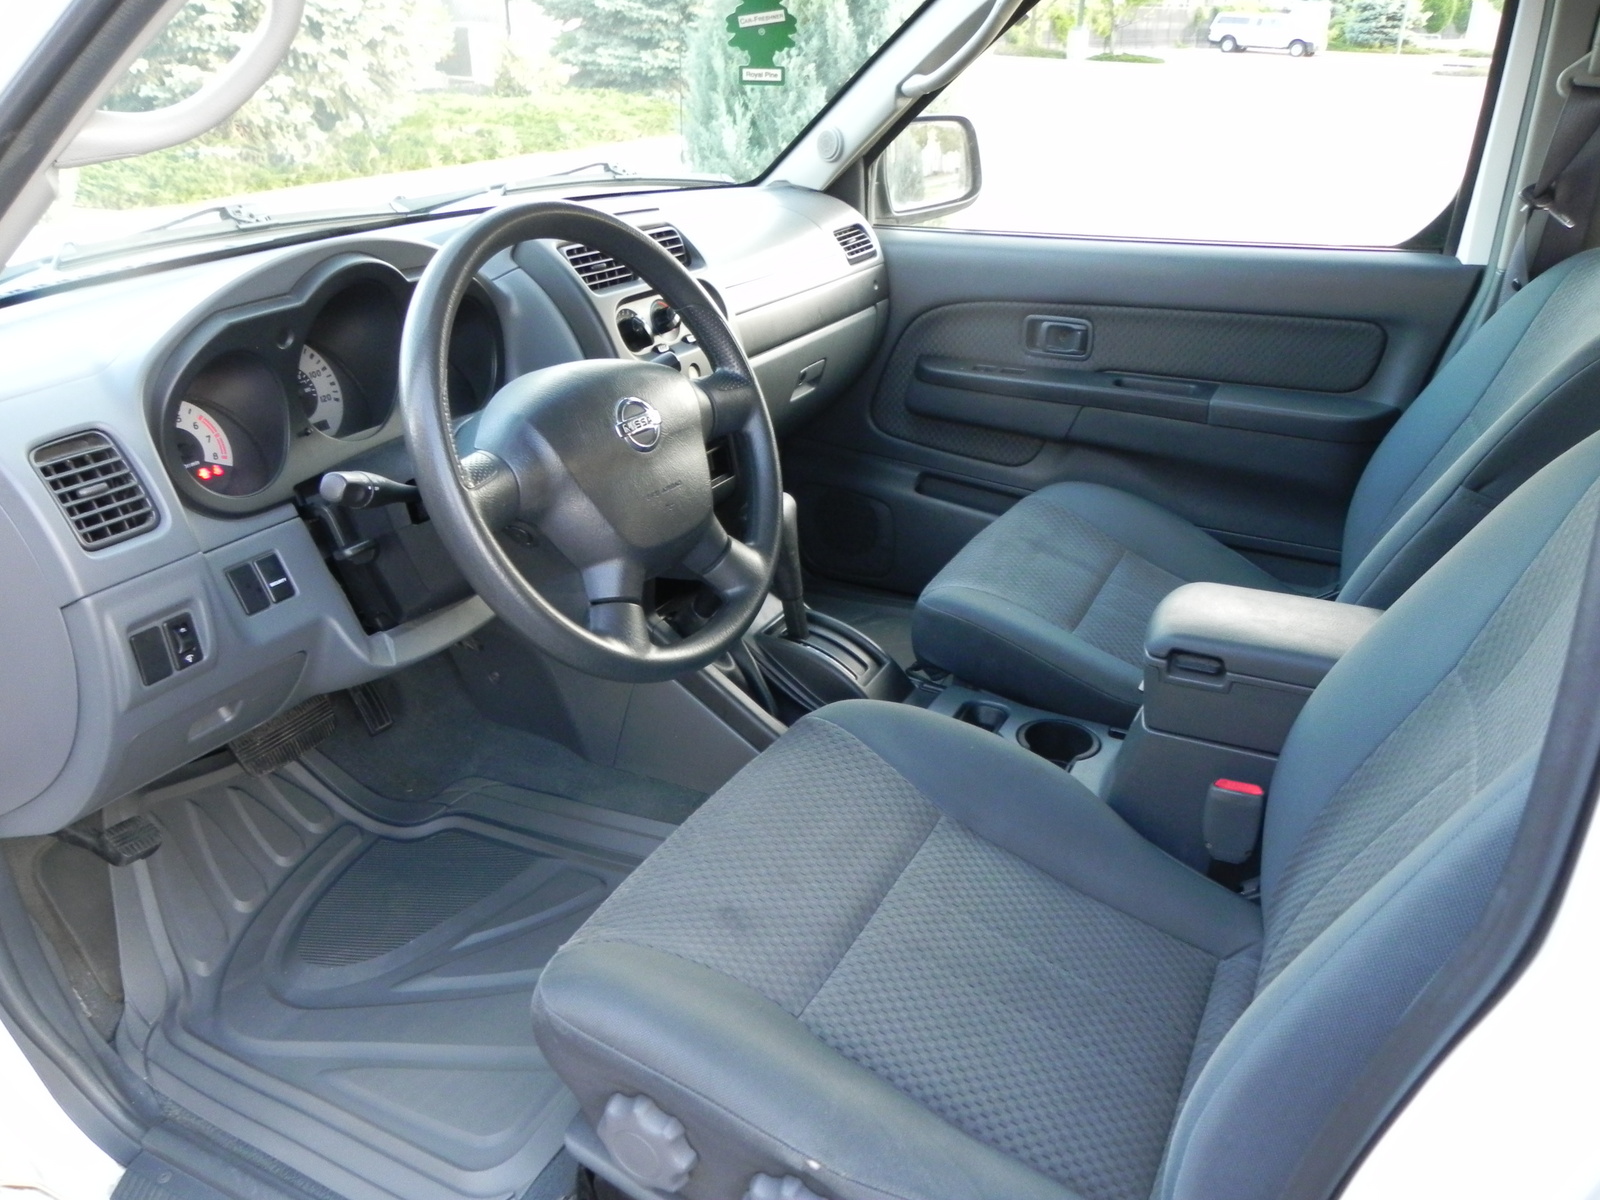 2004 Nissan xterra interior dimensions #2